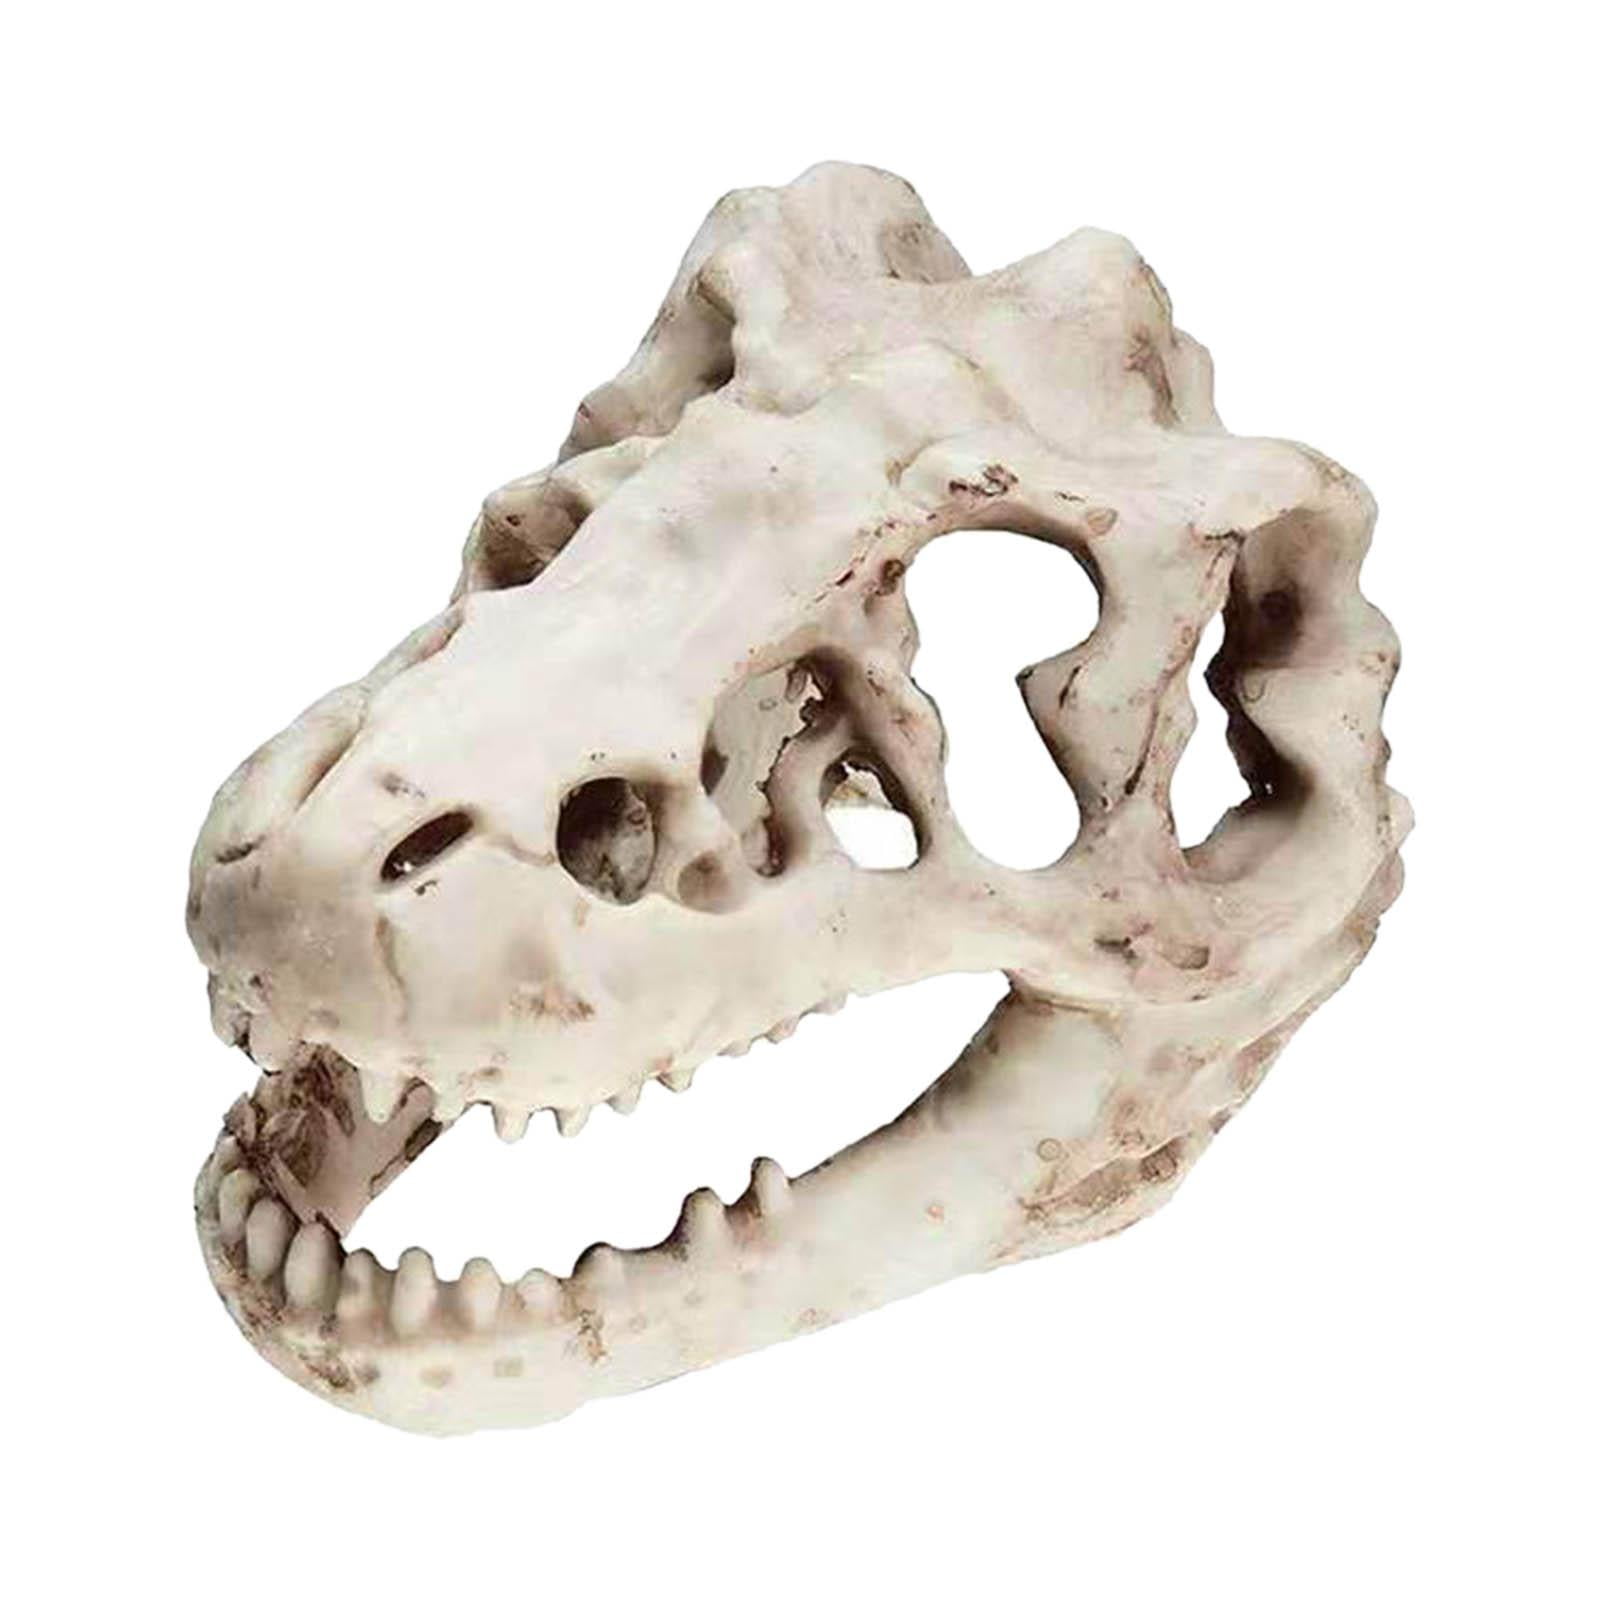 Details about   Wolf skull model Skeleton  Fish tank reptile pet Landscaping Gypsum white 